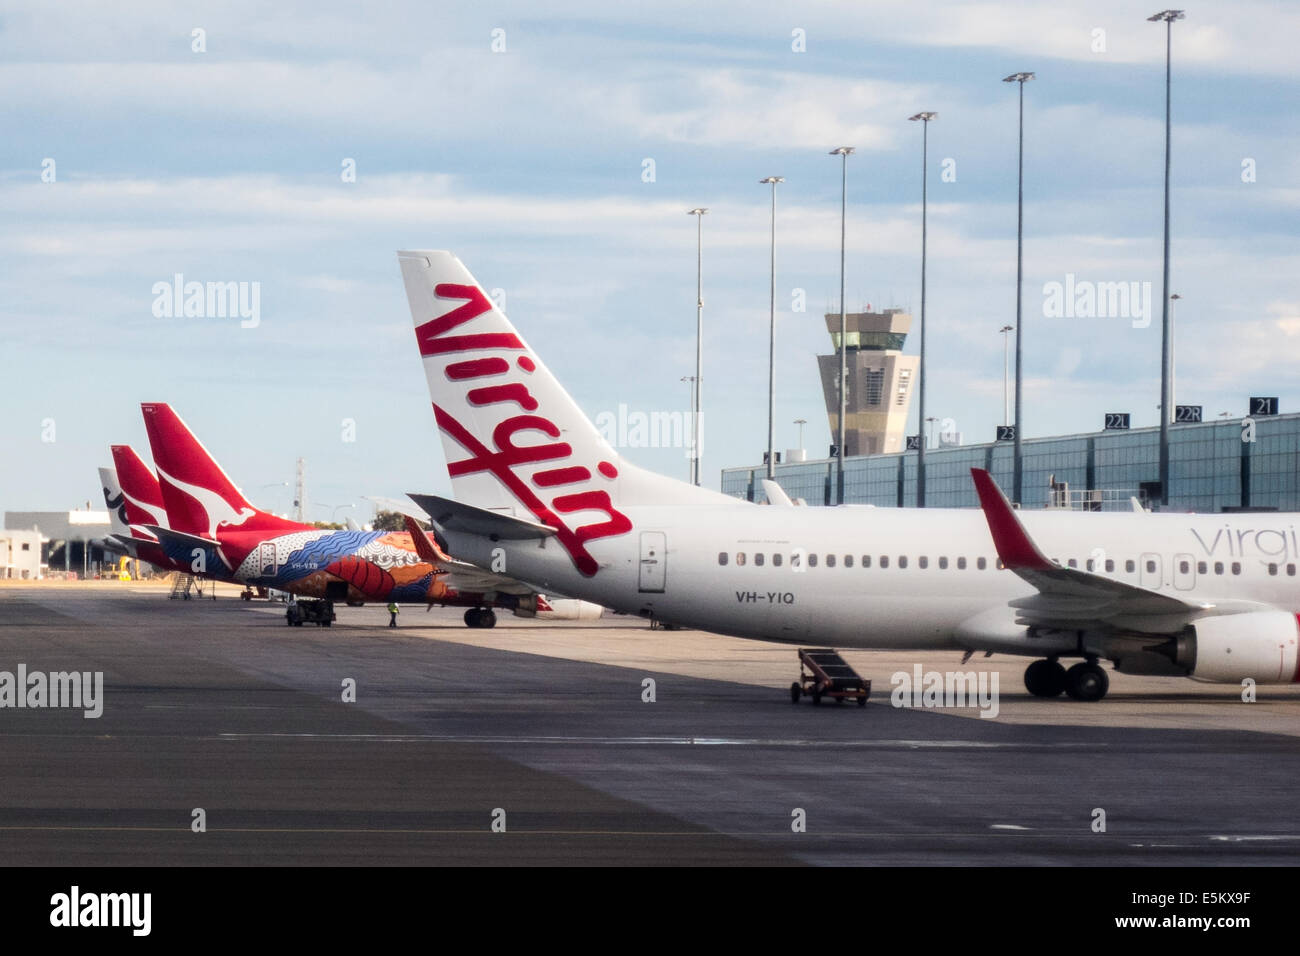 Virgin aircraft on tarmac with Qantas planes at Adelaide airport Australia Stock Photo